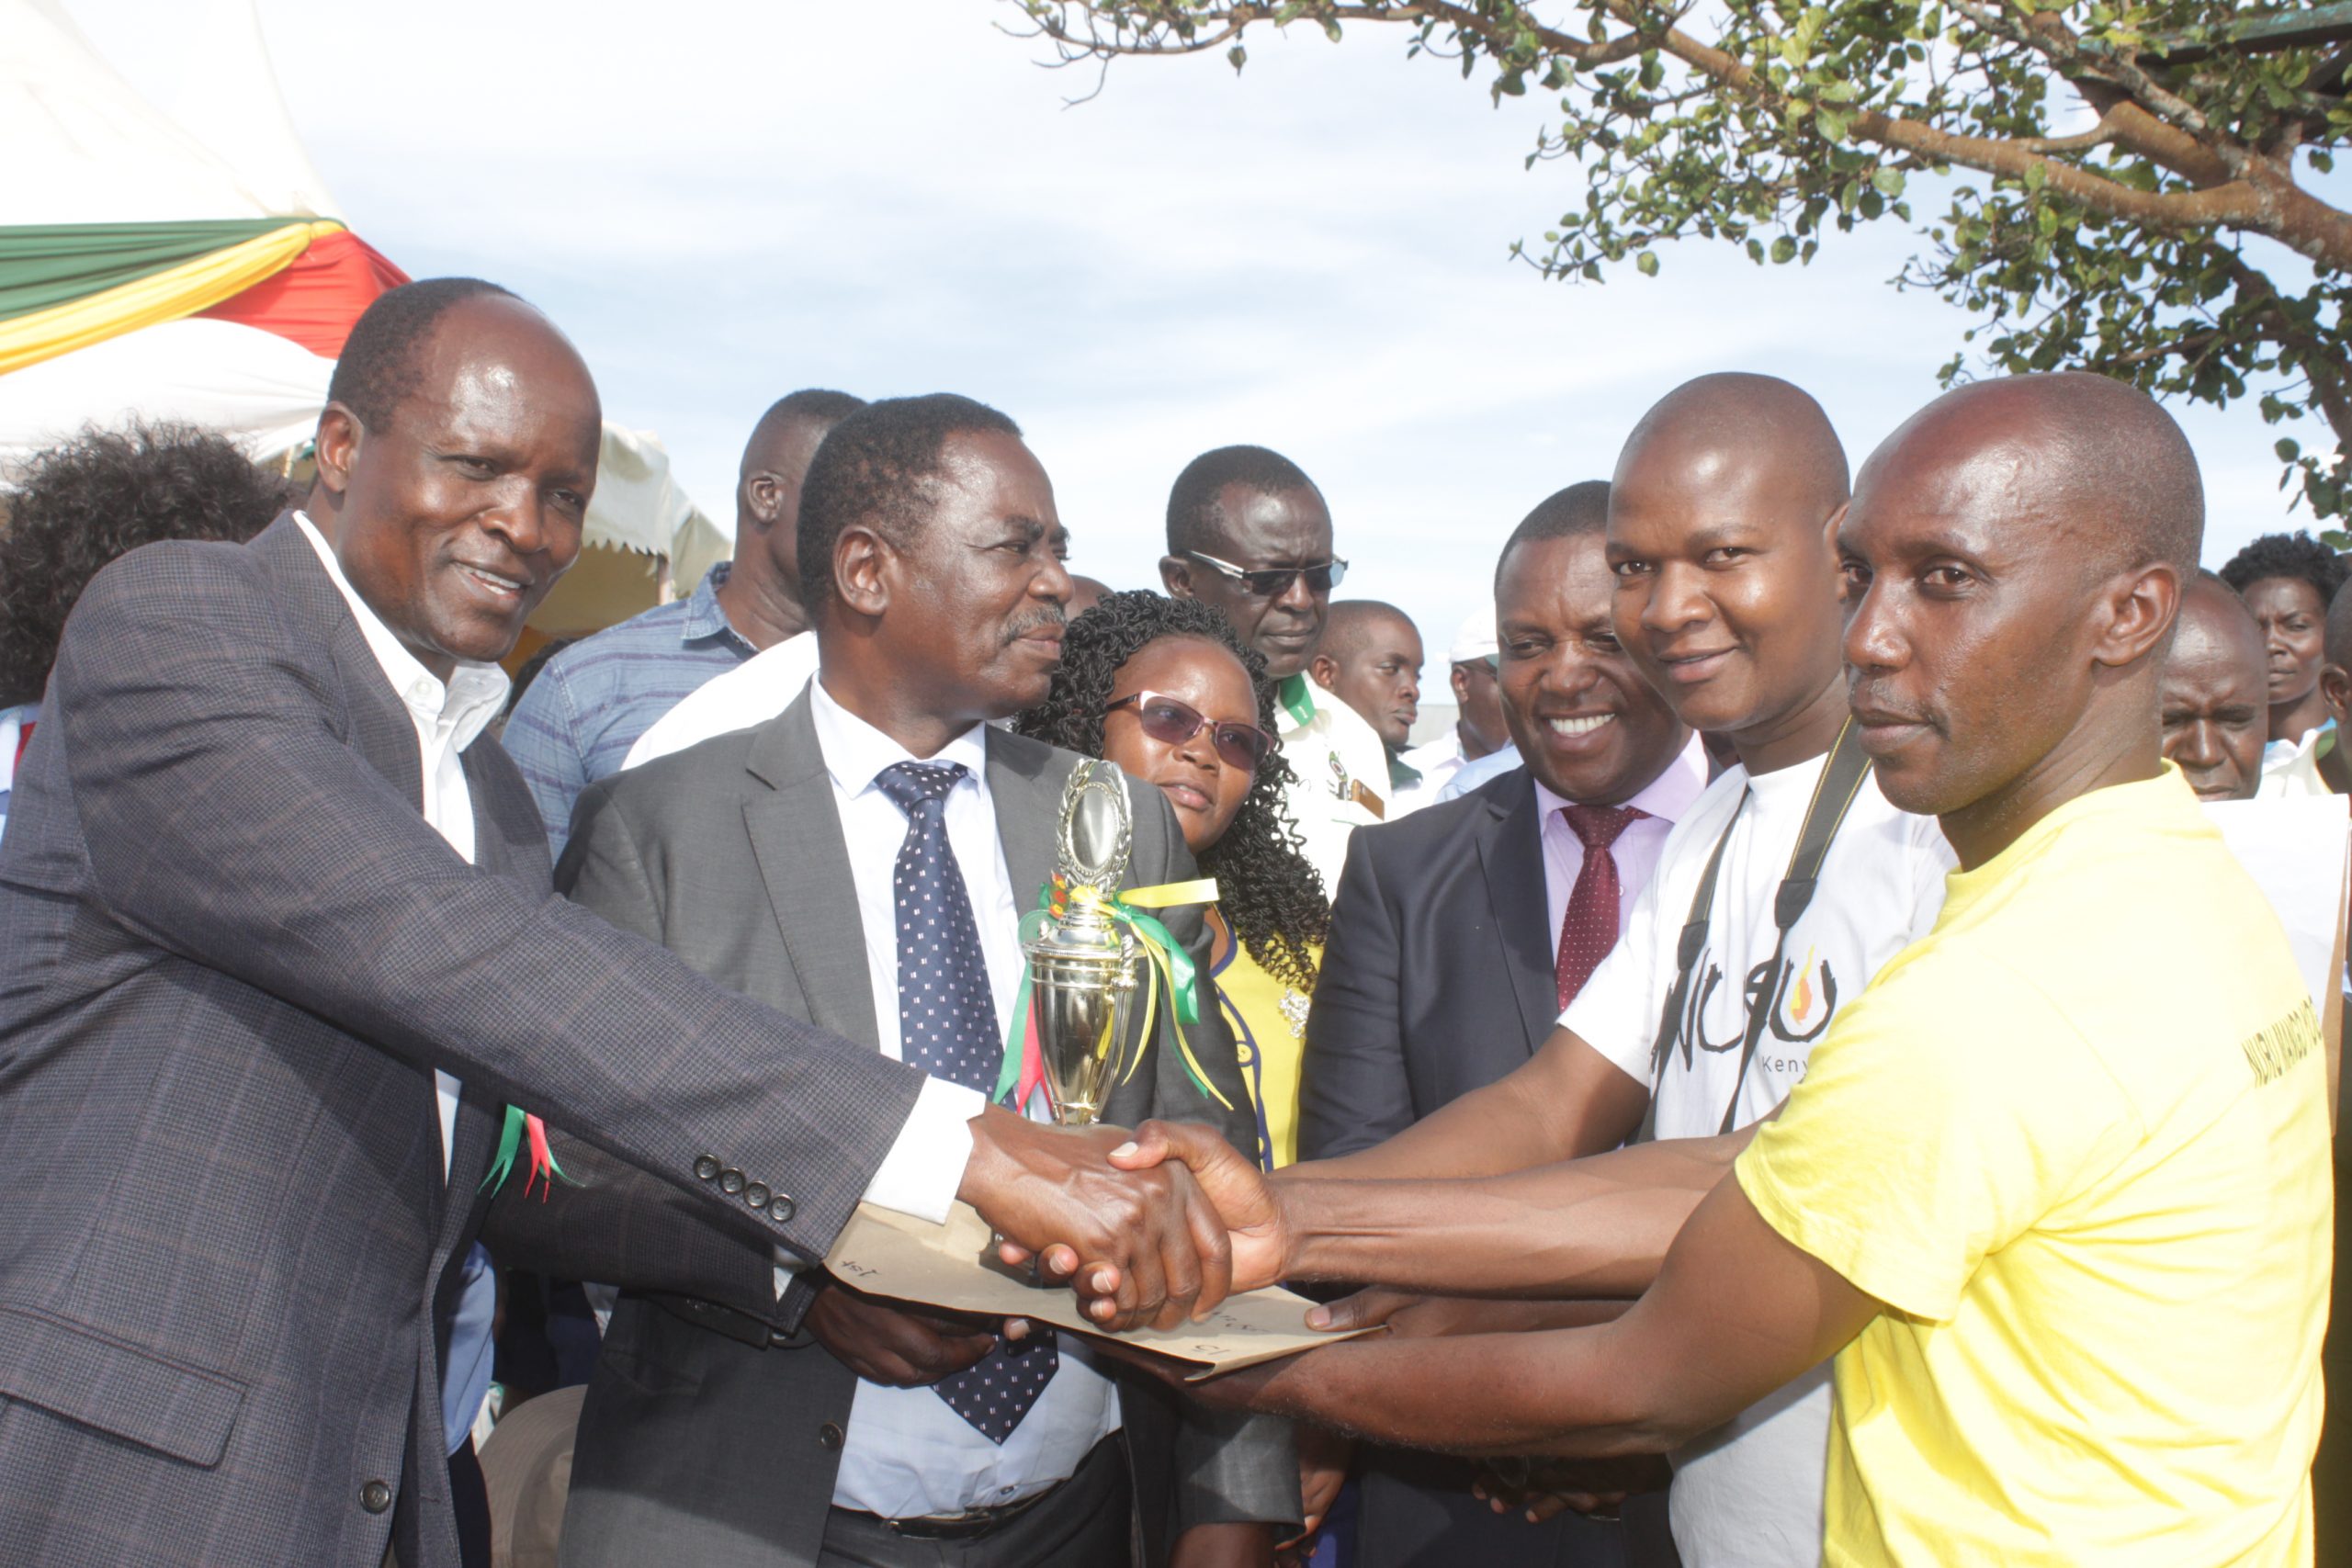 Nuru Kenya Receives Recognition from Migori County Governor